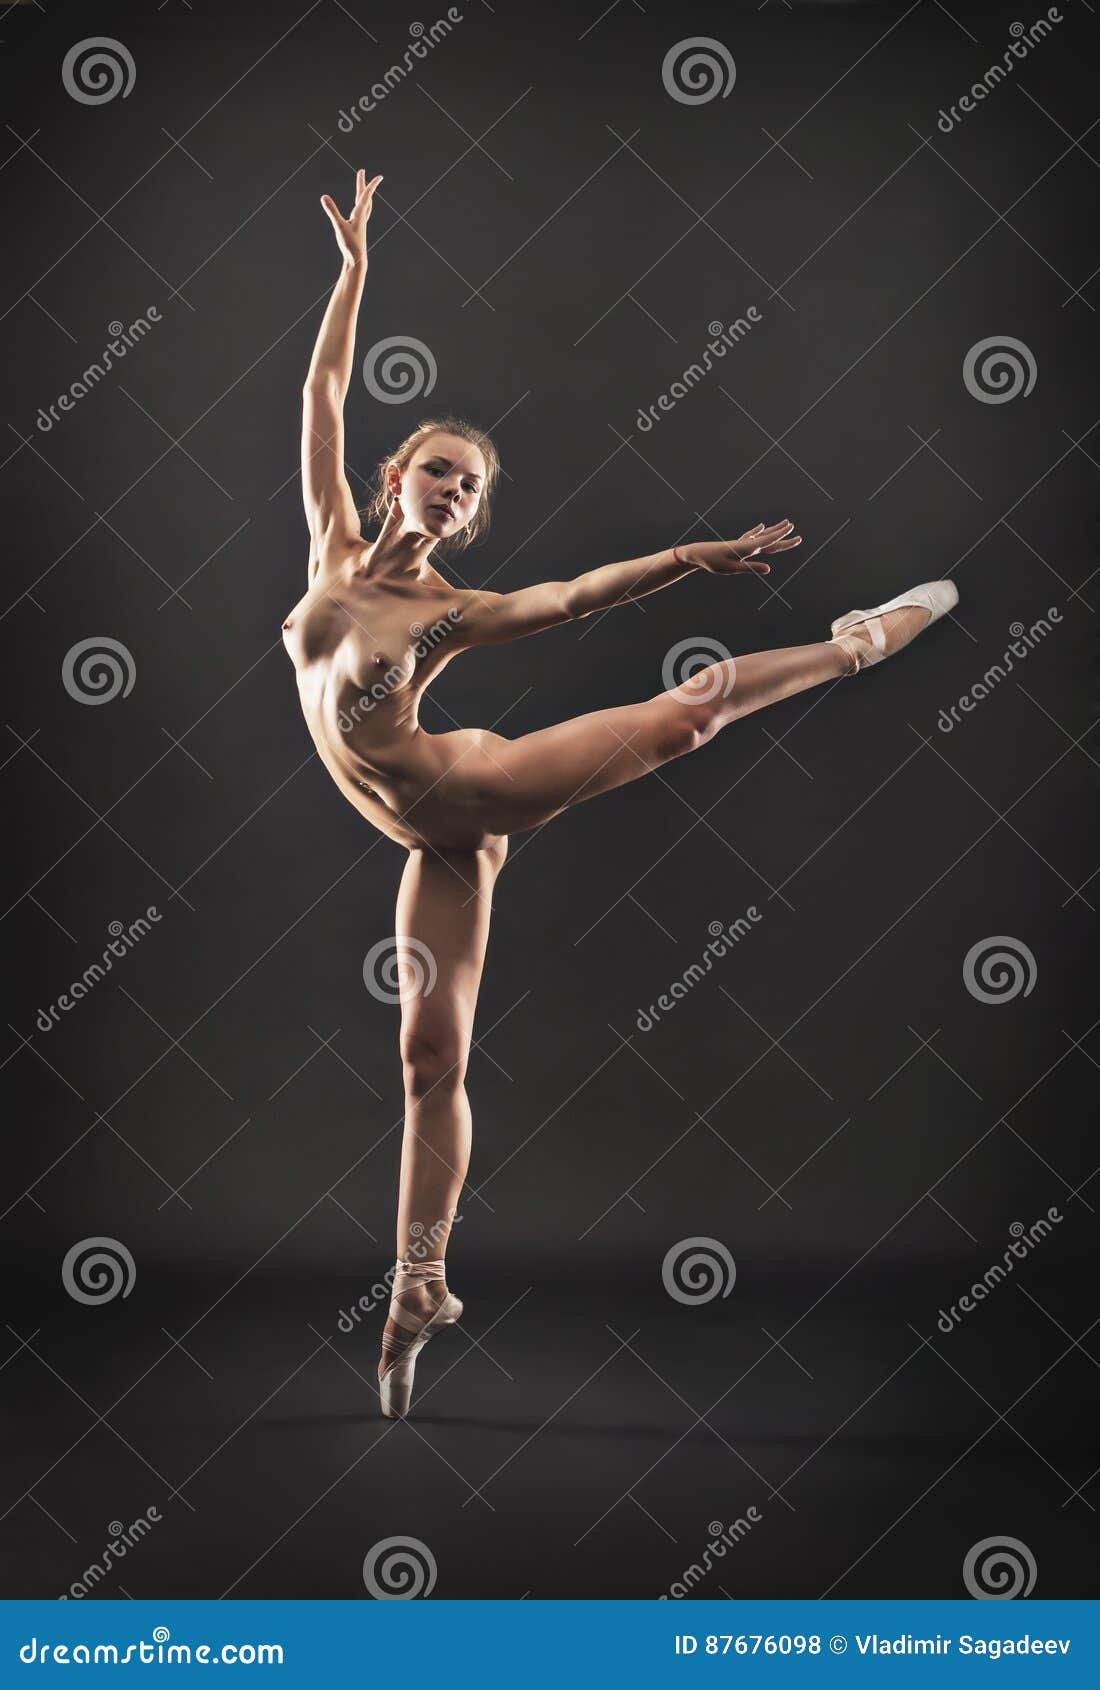 alexis bayne add naked women in ballet photo